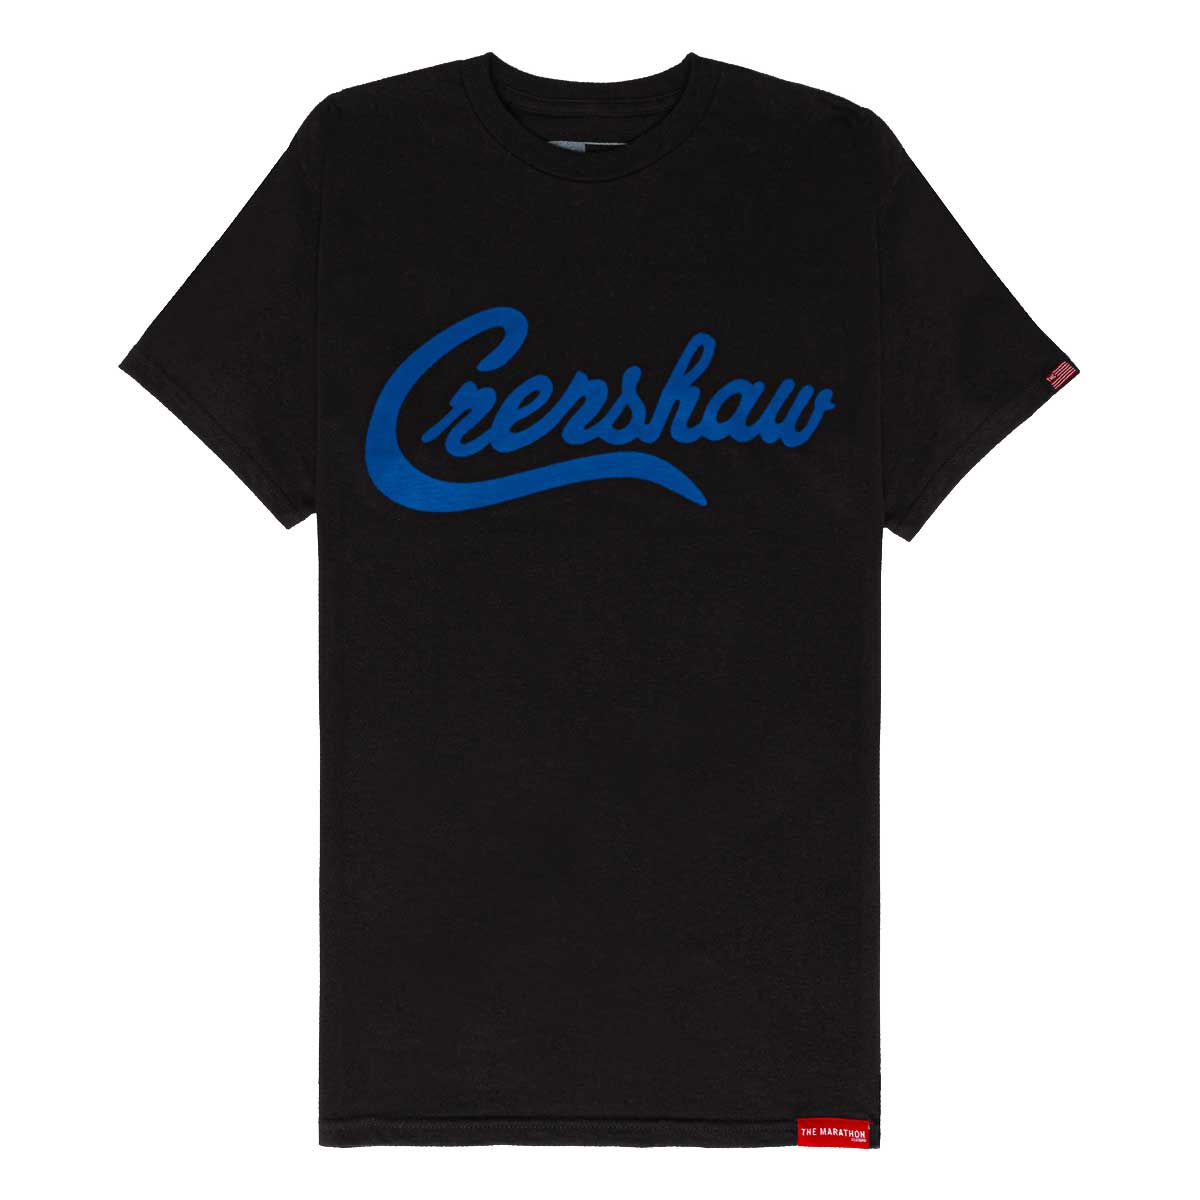 Crenshaw T-Shirt - Black/Royal